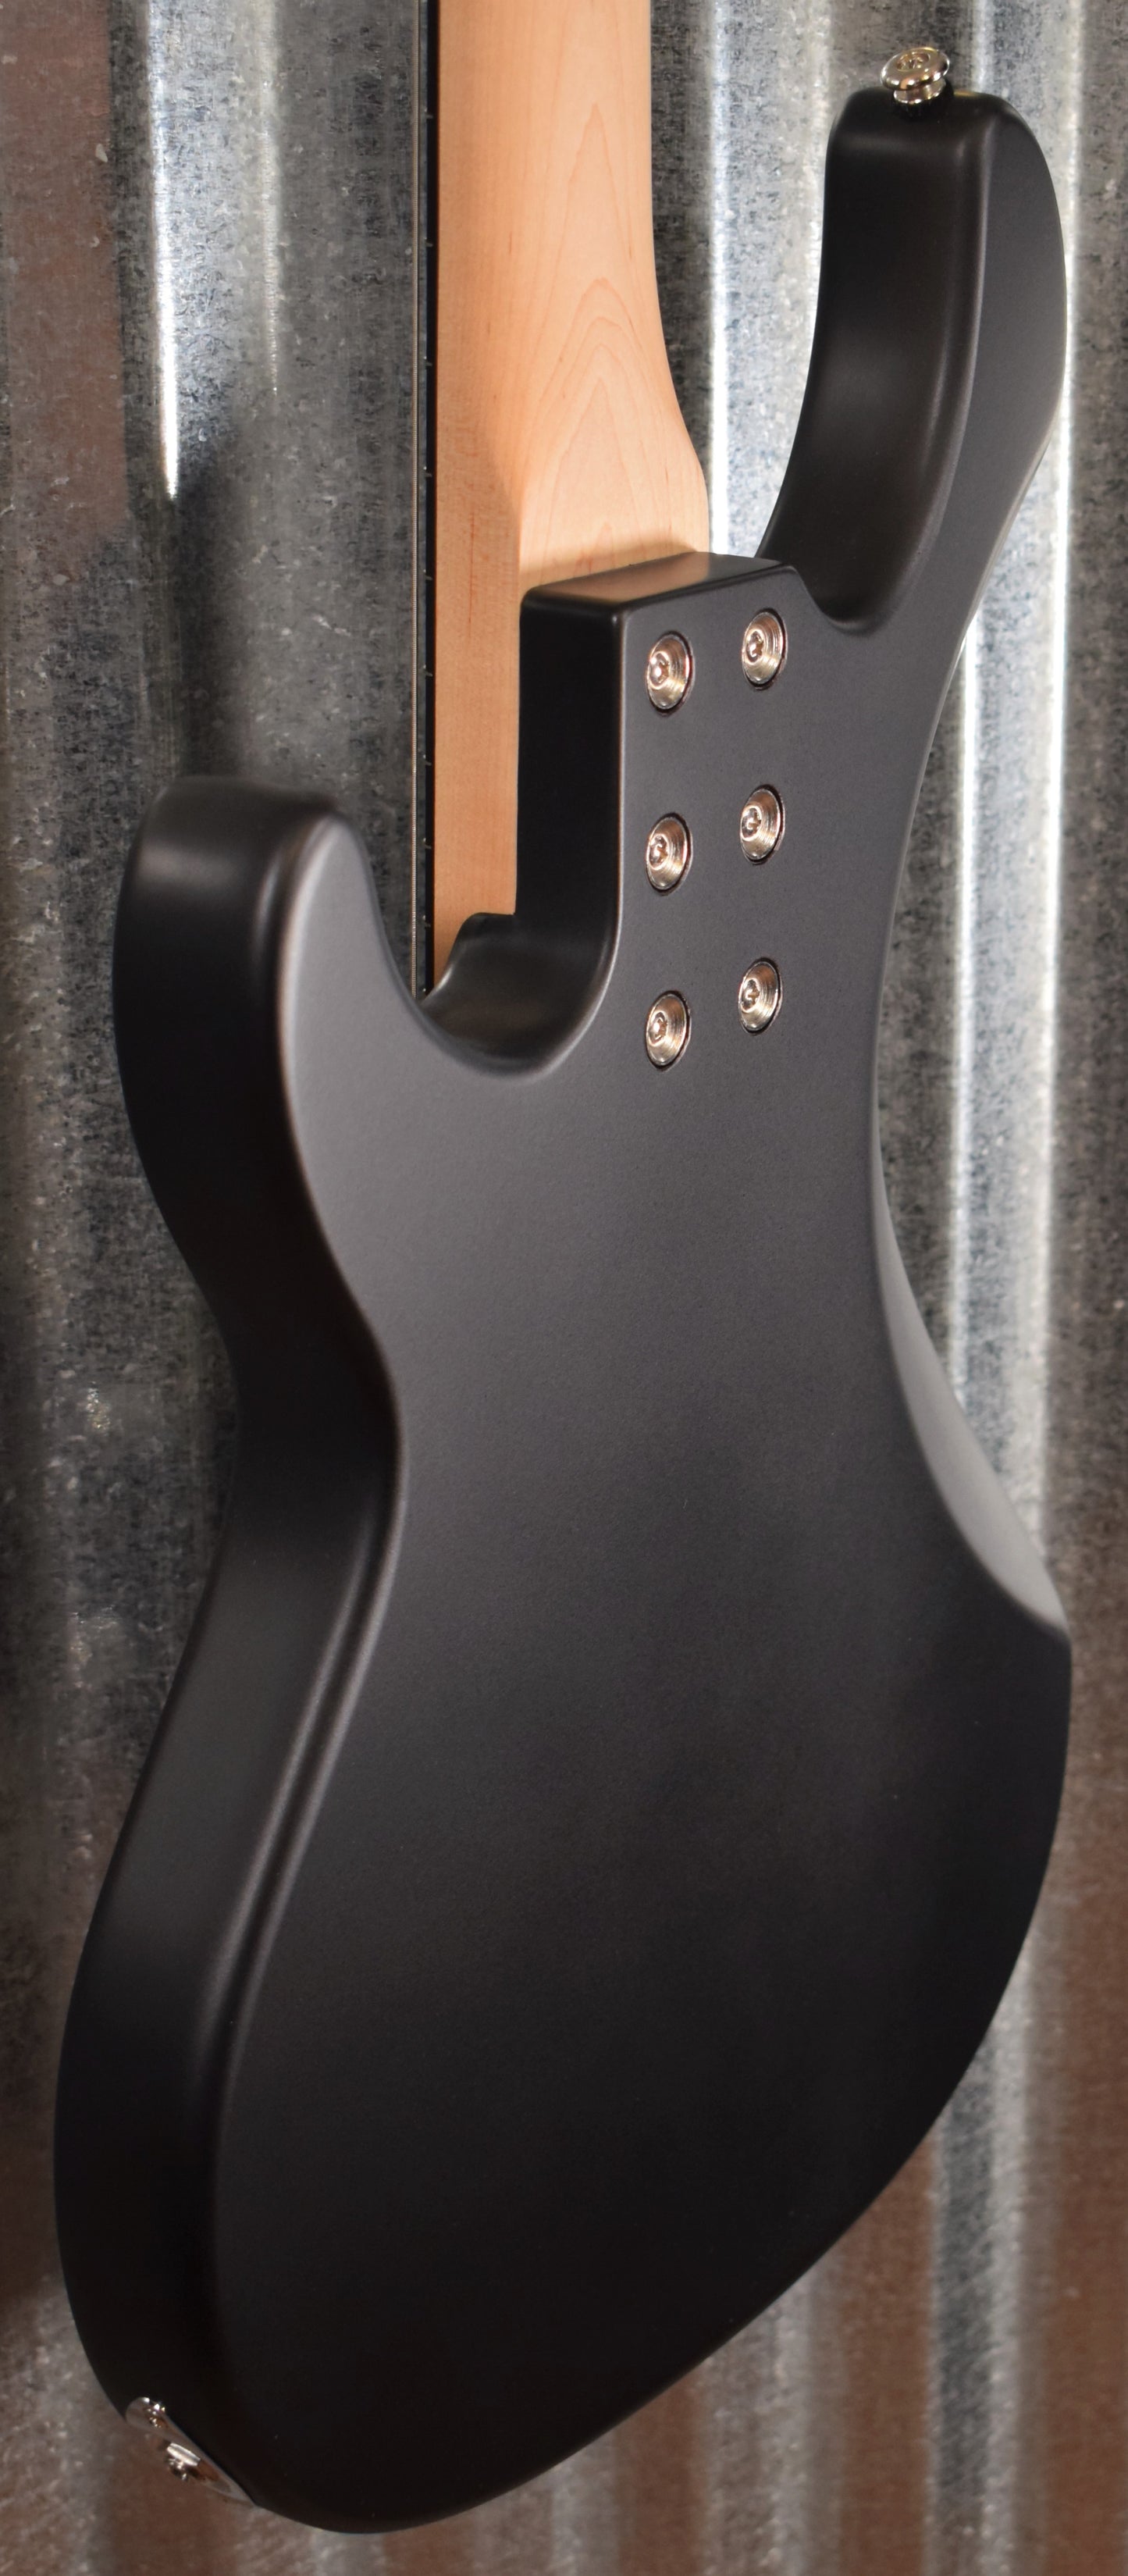 G&L USA Fullerton Custom Kiloton 5 String Jet Black Frost Bass & Case #1070